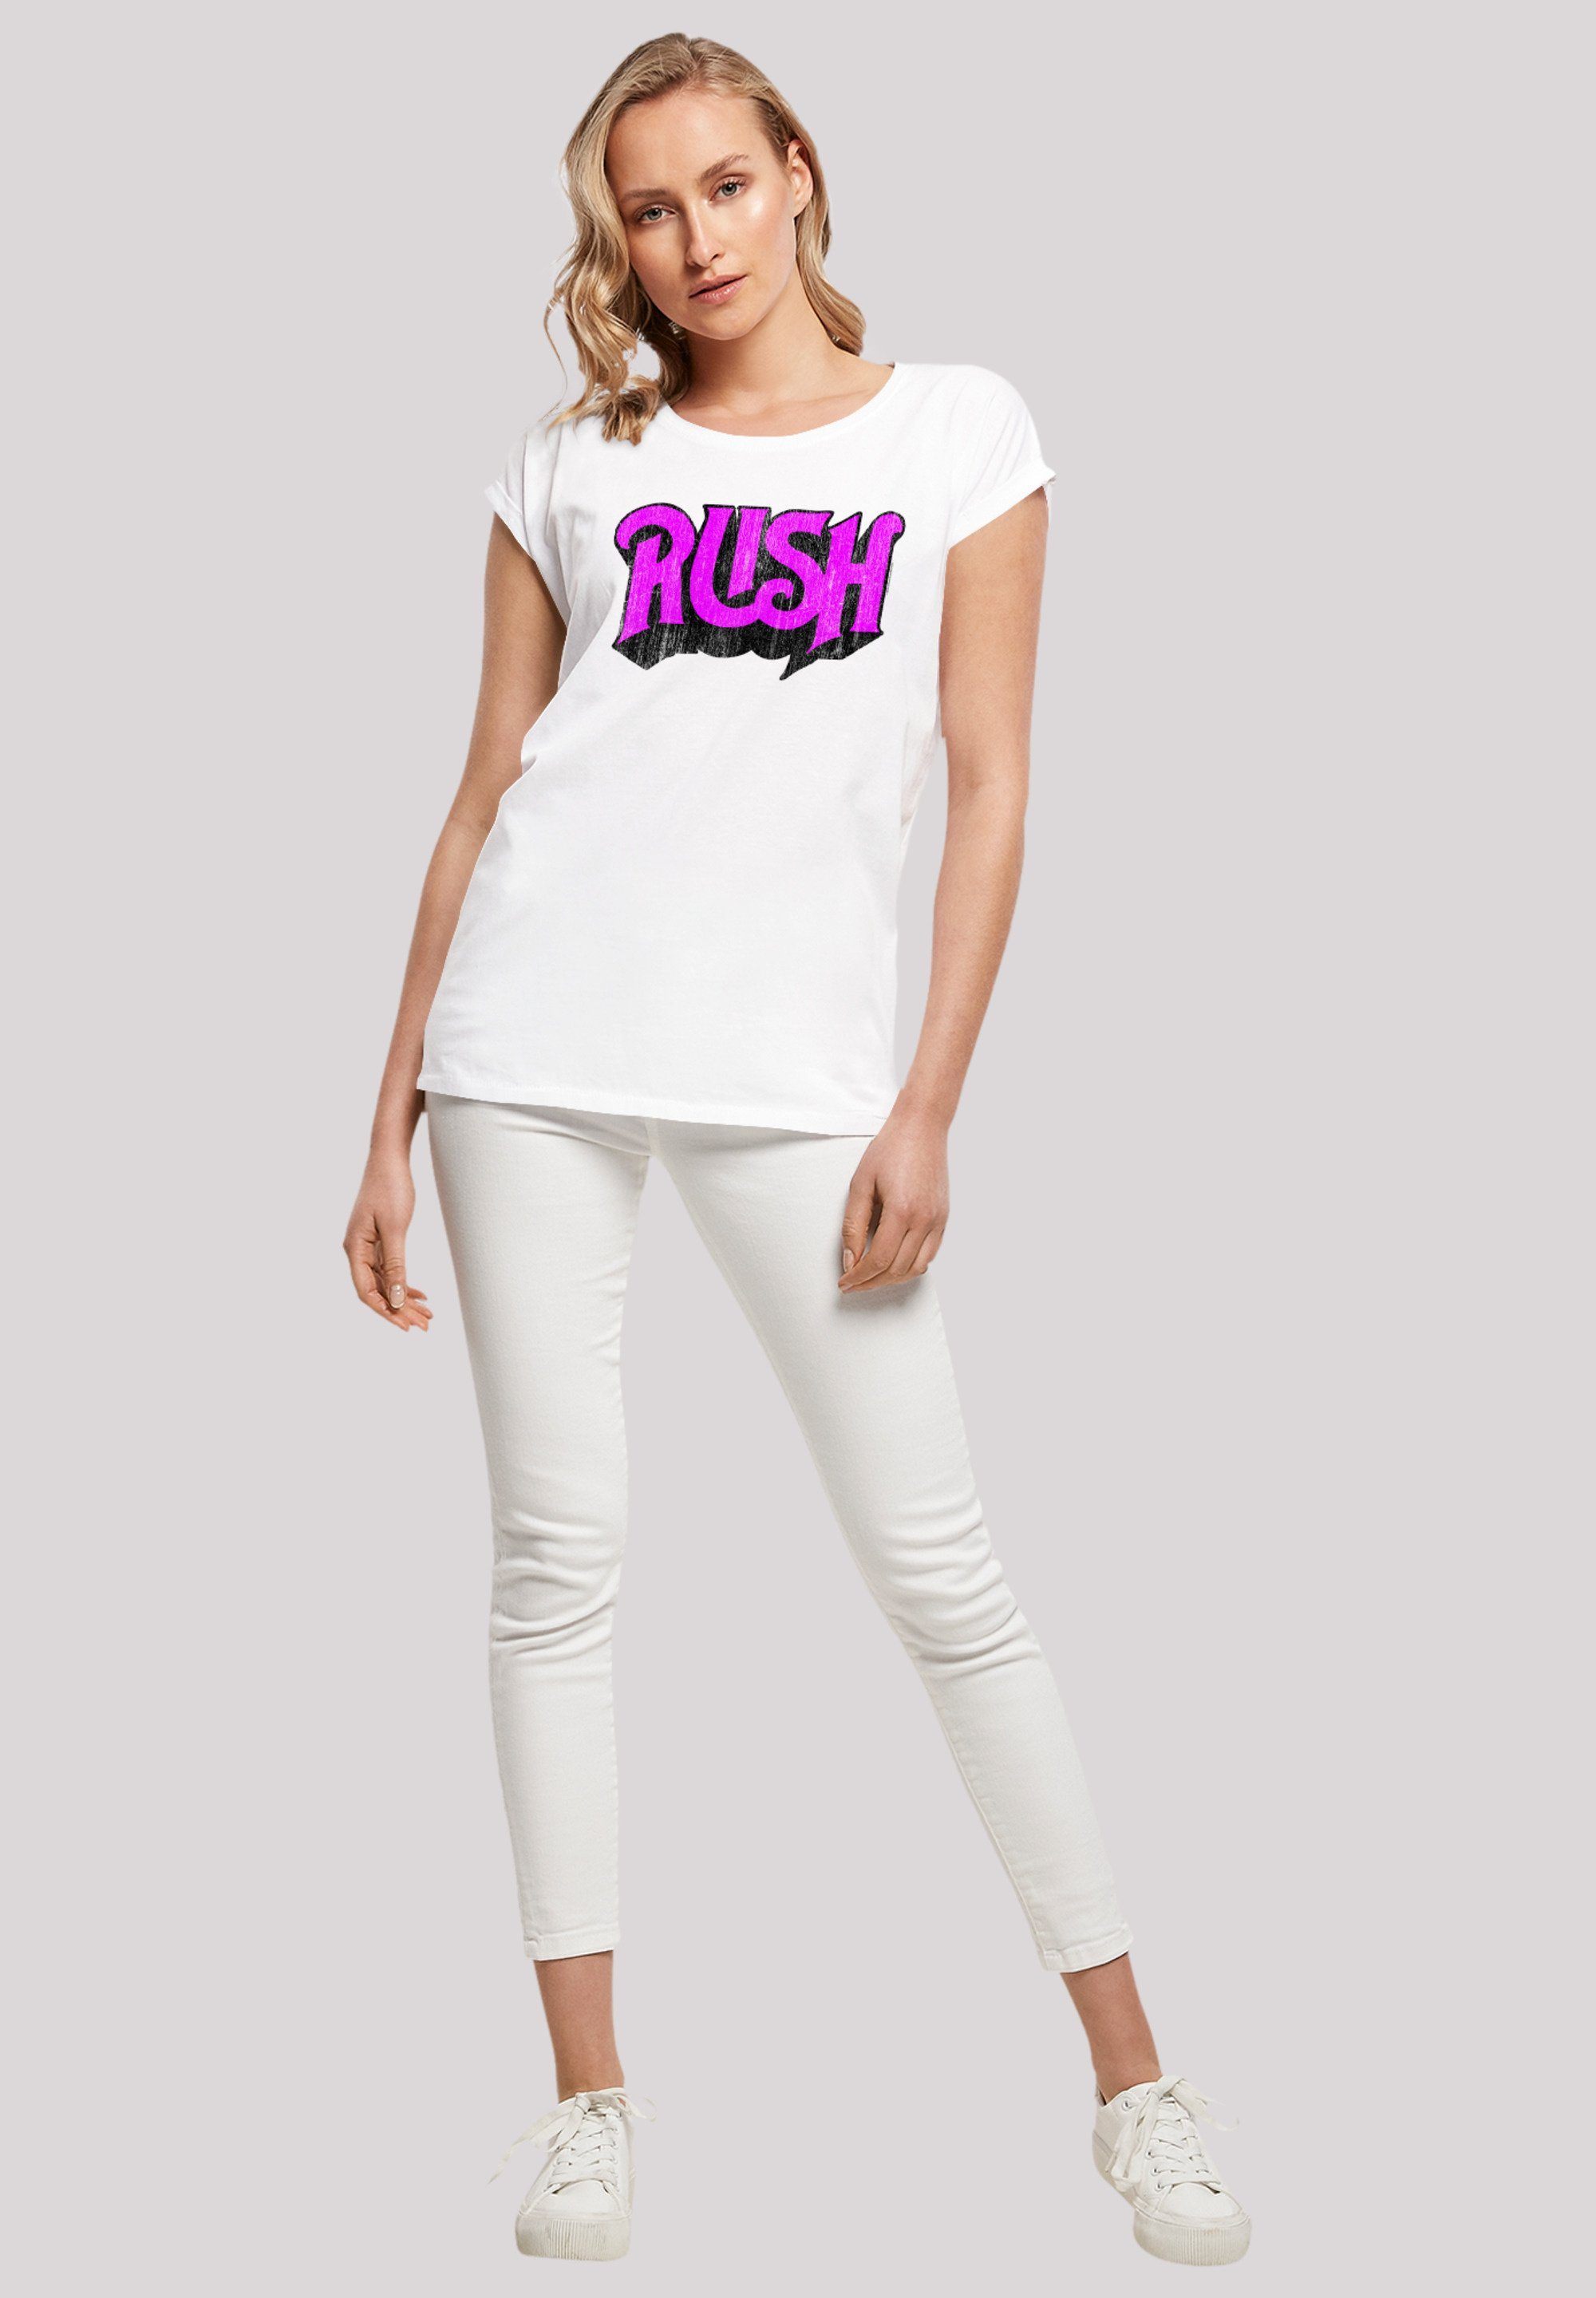 Premium weiß F4NT4STIC Logo Rush T-Shirt Qualität Rock Distressed Band